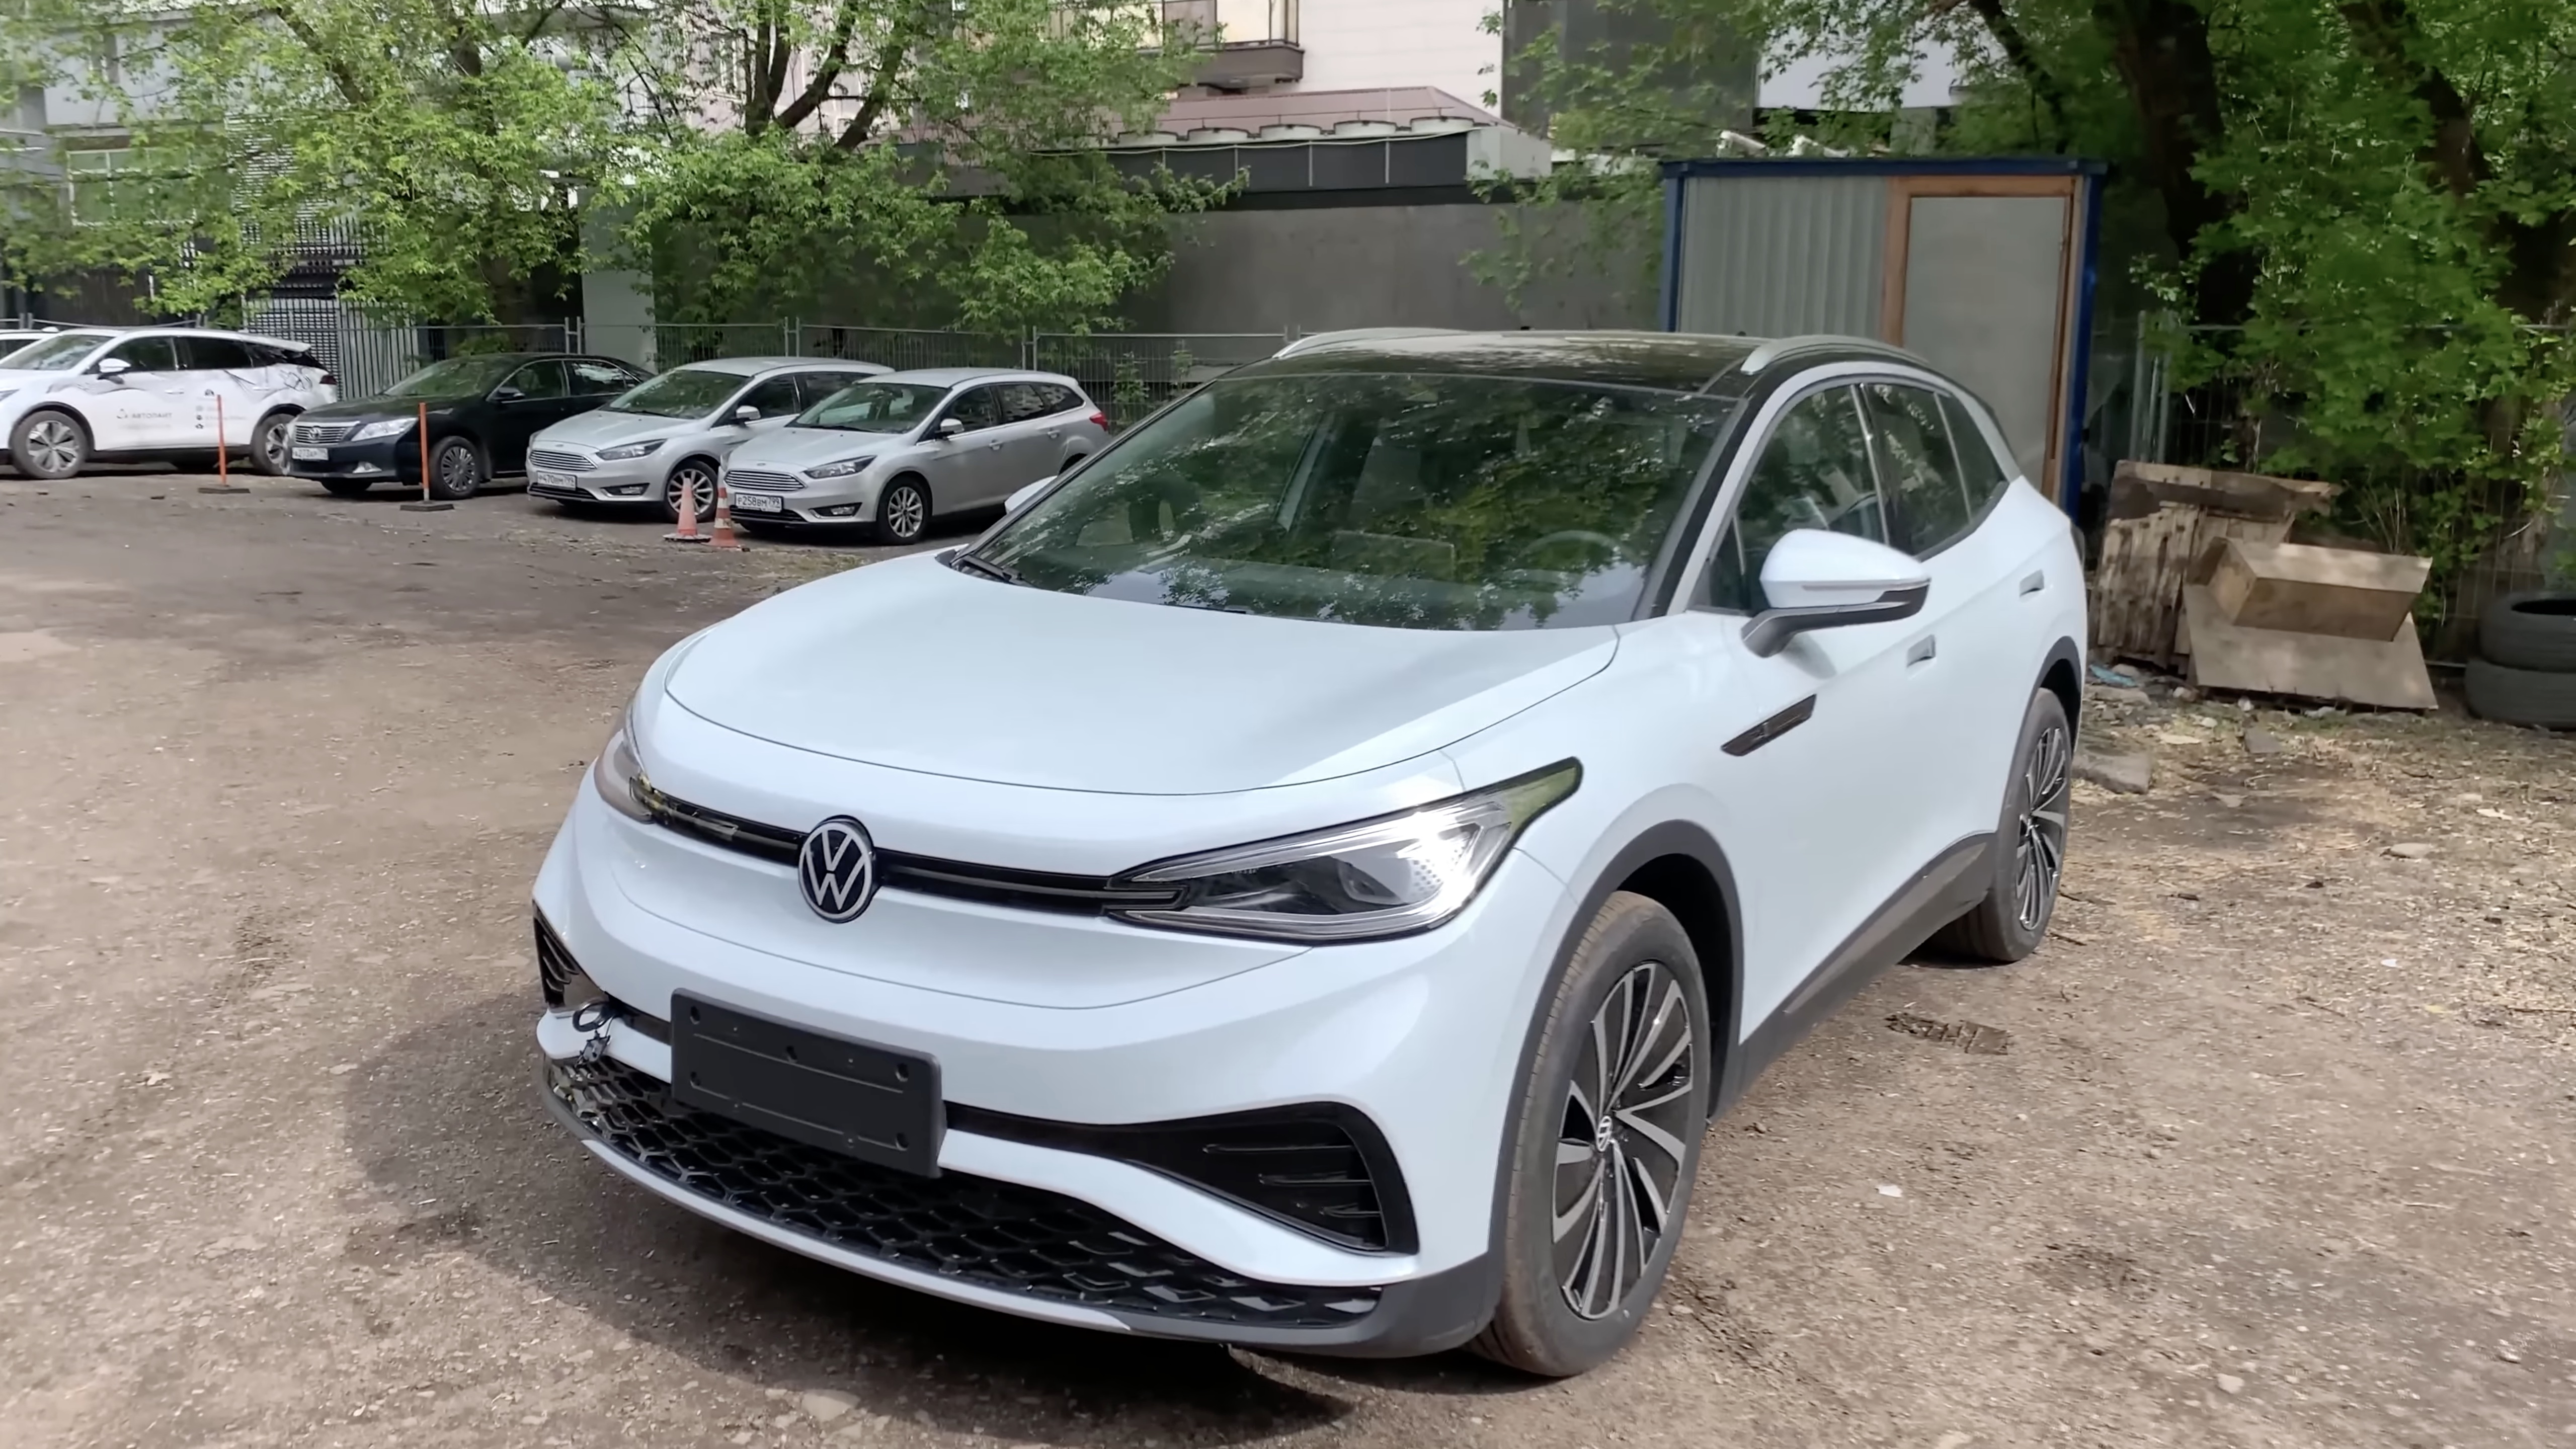 Анонс видео-теста VW ID 4 из Китая - очередная победа